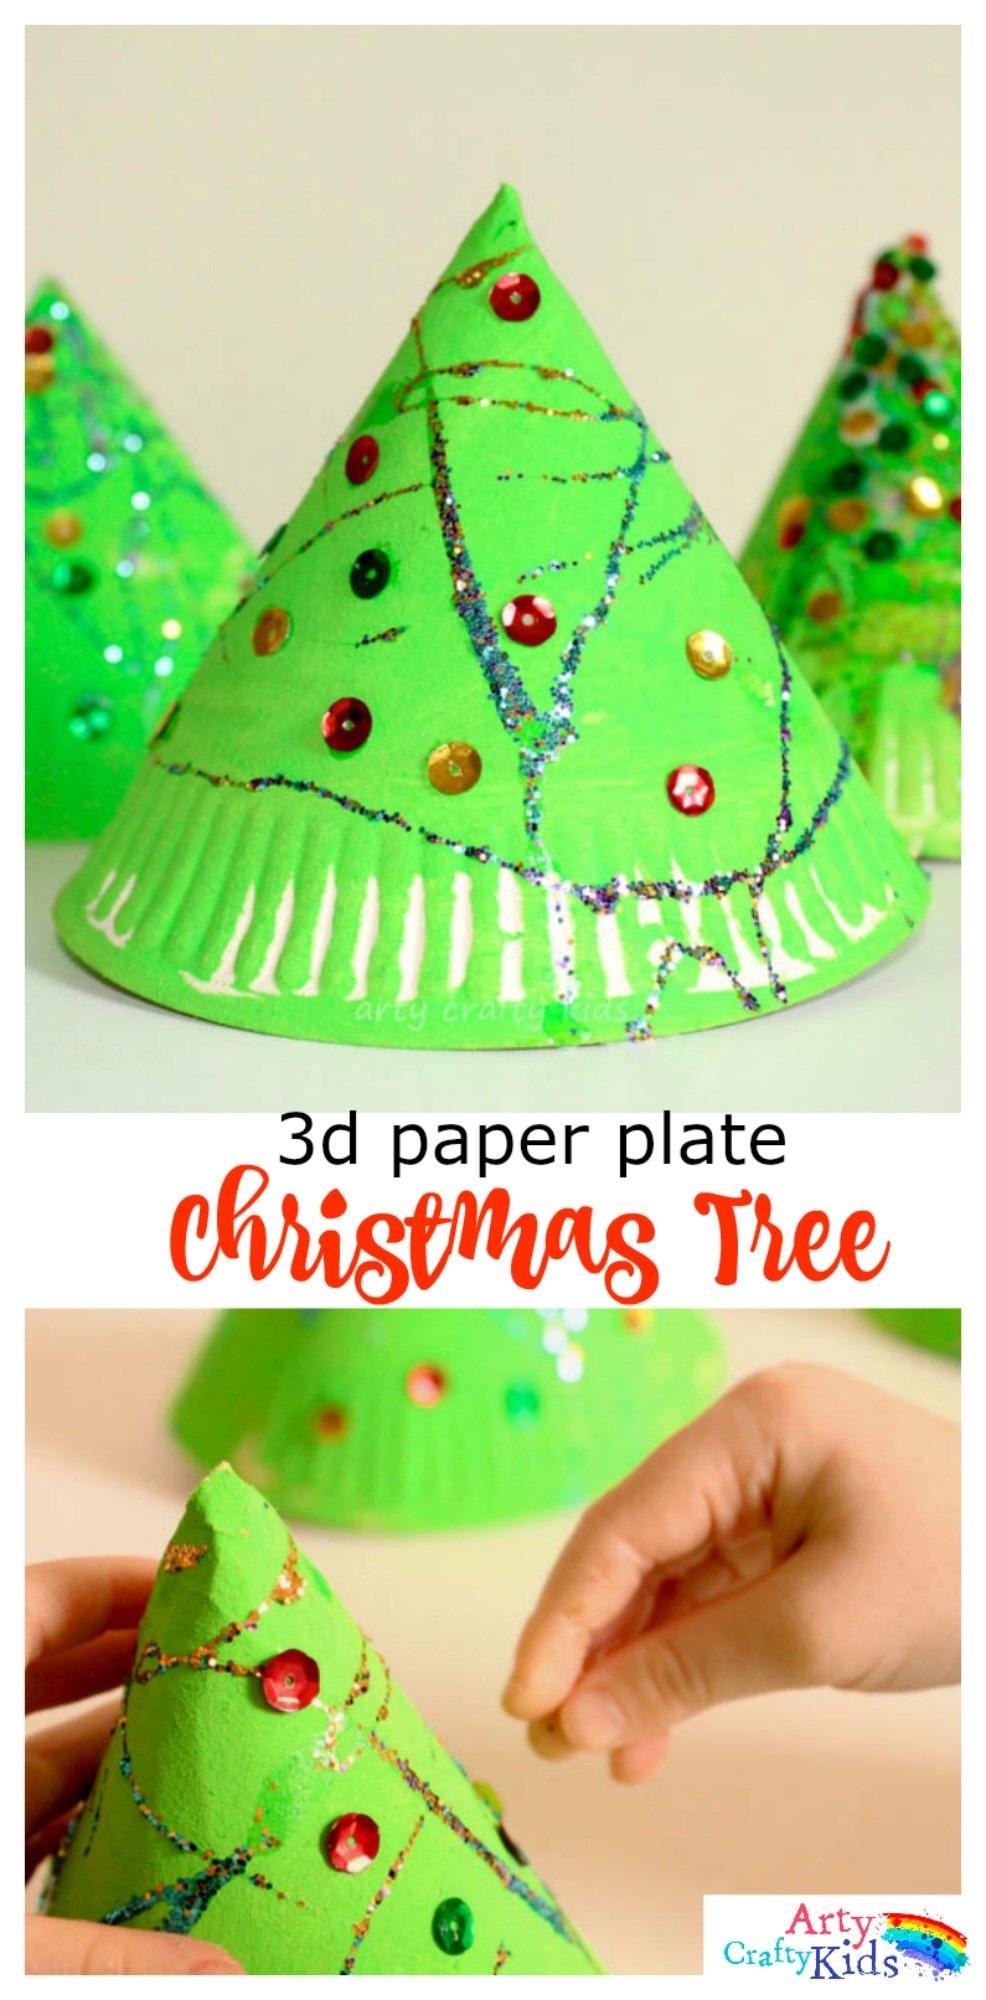 Simple Preschool Crafts
 Super Fun 3d Paper Plate Christmas Tree Craft